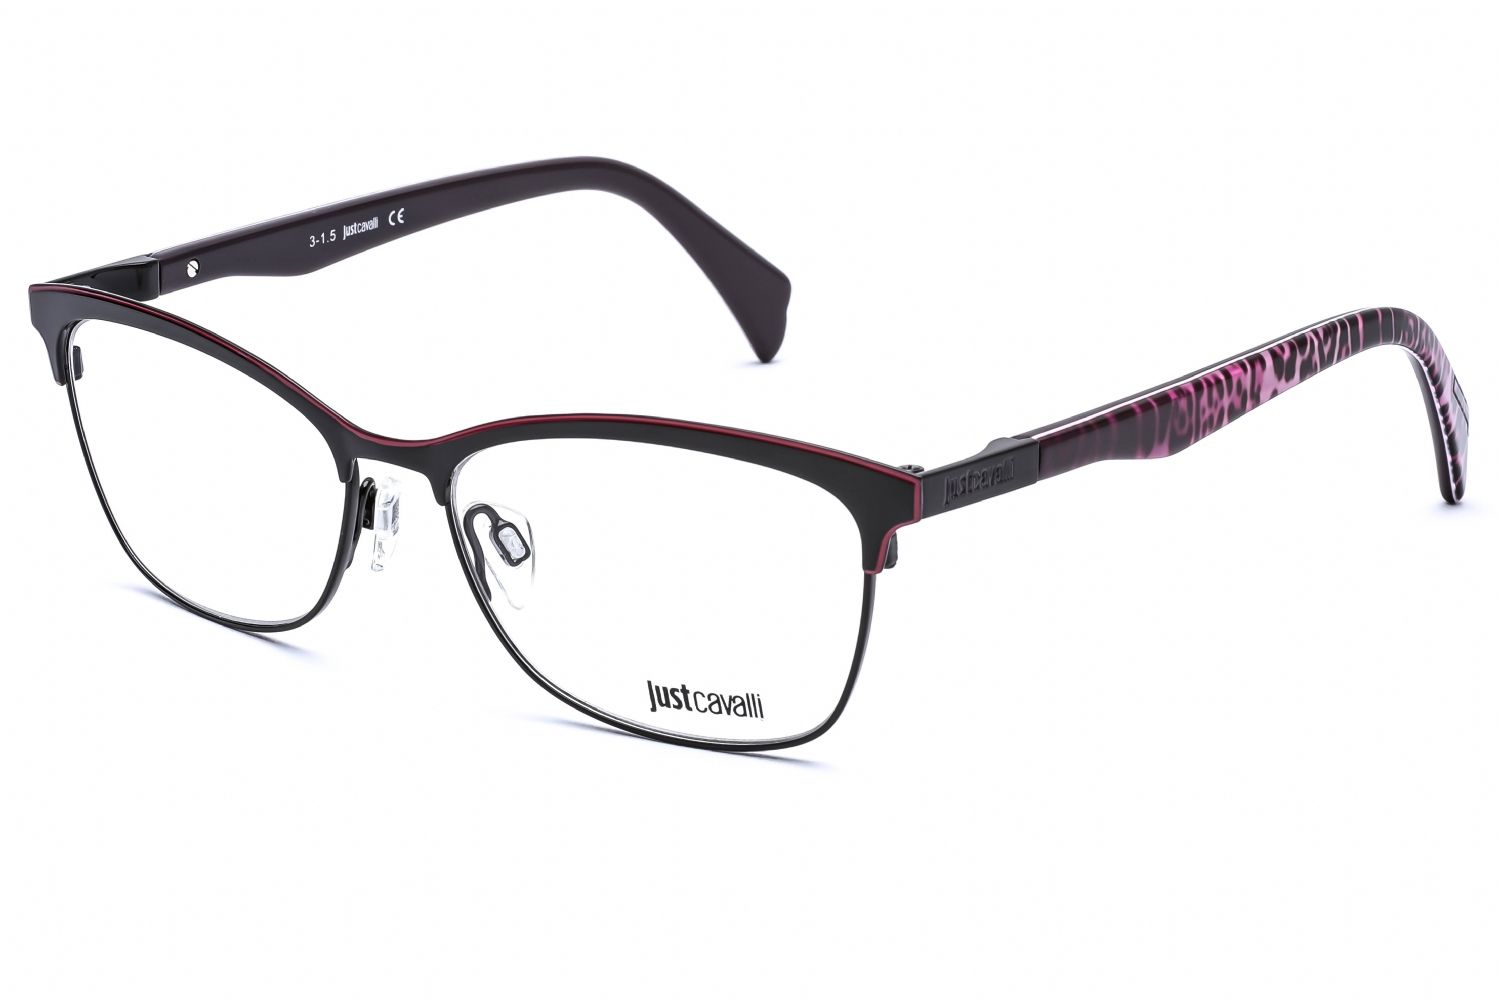 Style: JUST CAVALLI JC0614 Eyeglasses Shiny Black / Clear Lens Brand: JUST CAVALLI Frame Style: Rectangular Frame Material: metal Color : Shiny Black / Clear Lens unisex Eyeglasses